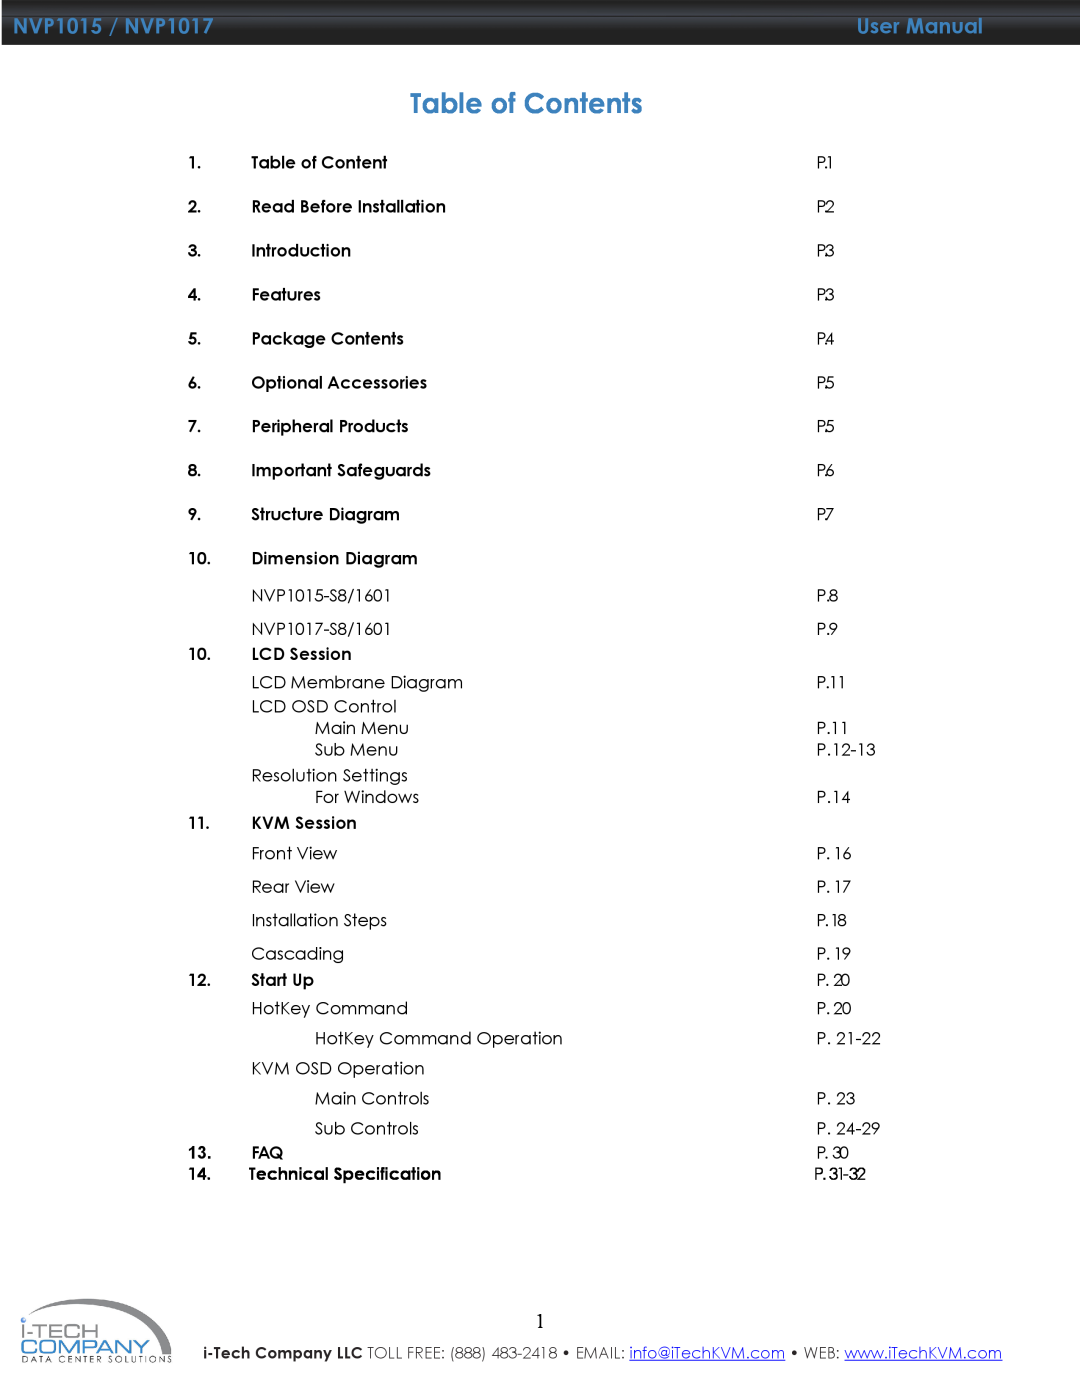 I-Tech Company manual NVP1015 / NVP1017User Manual, Table of Contents 